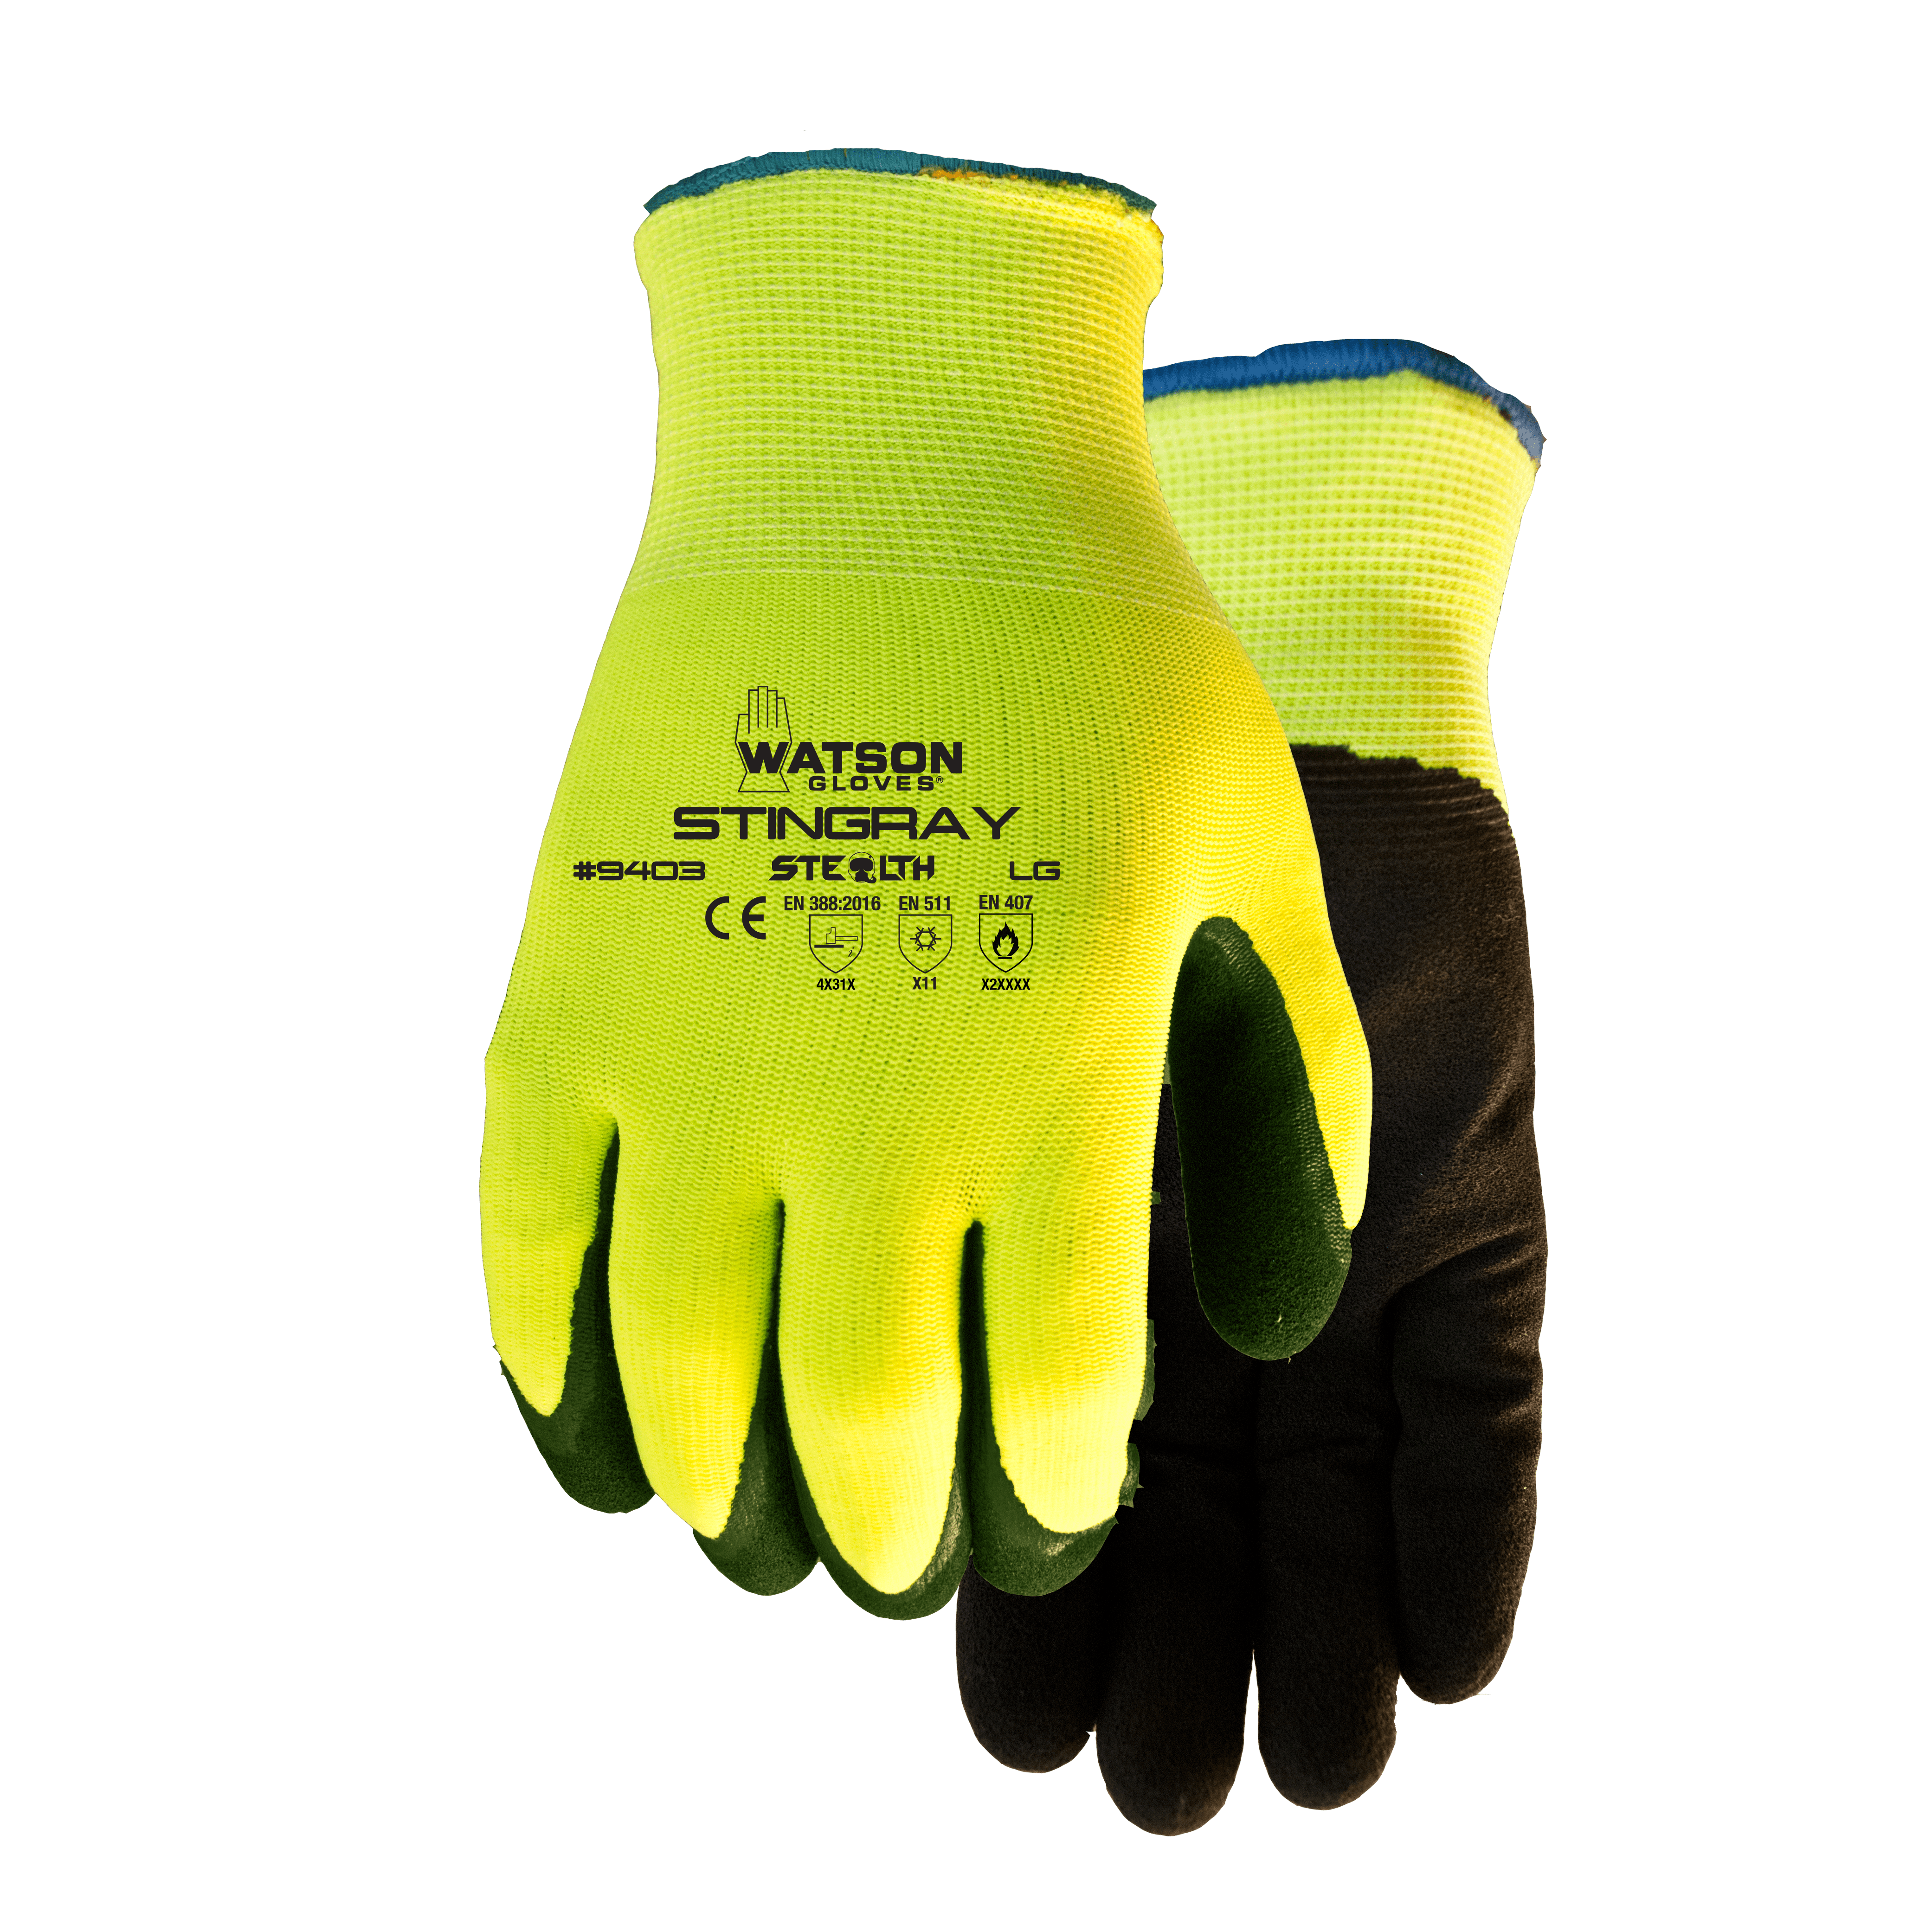 Watson Gloves STEALTH STINGRAY - XLARGE